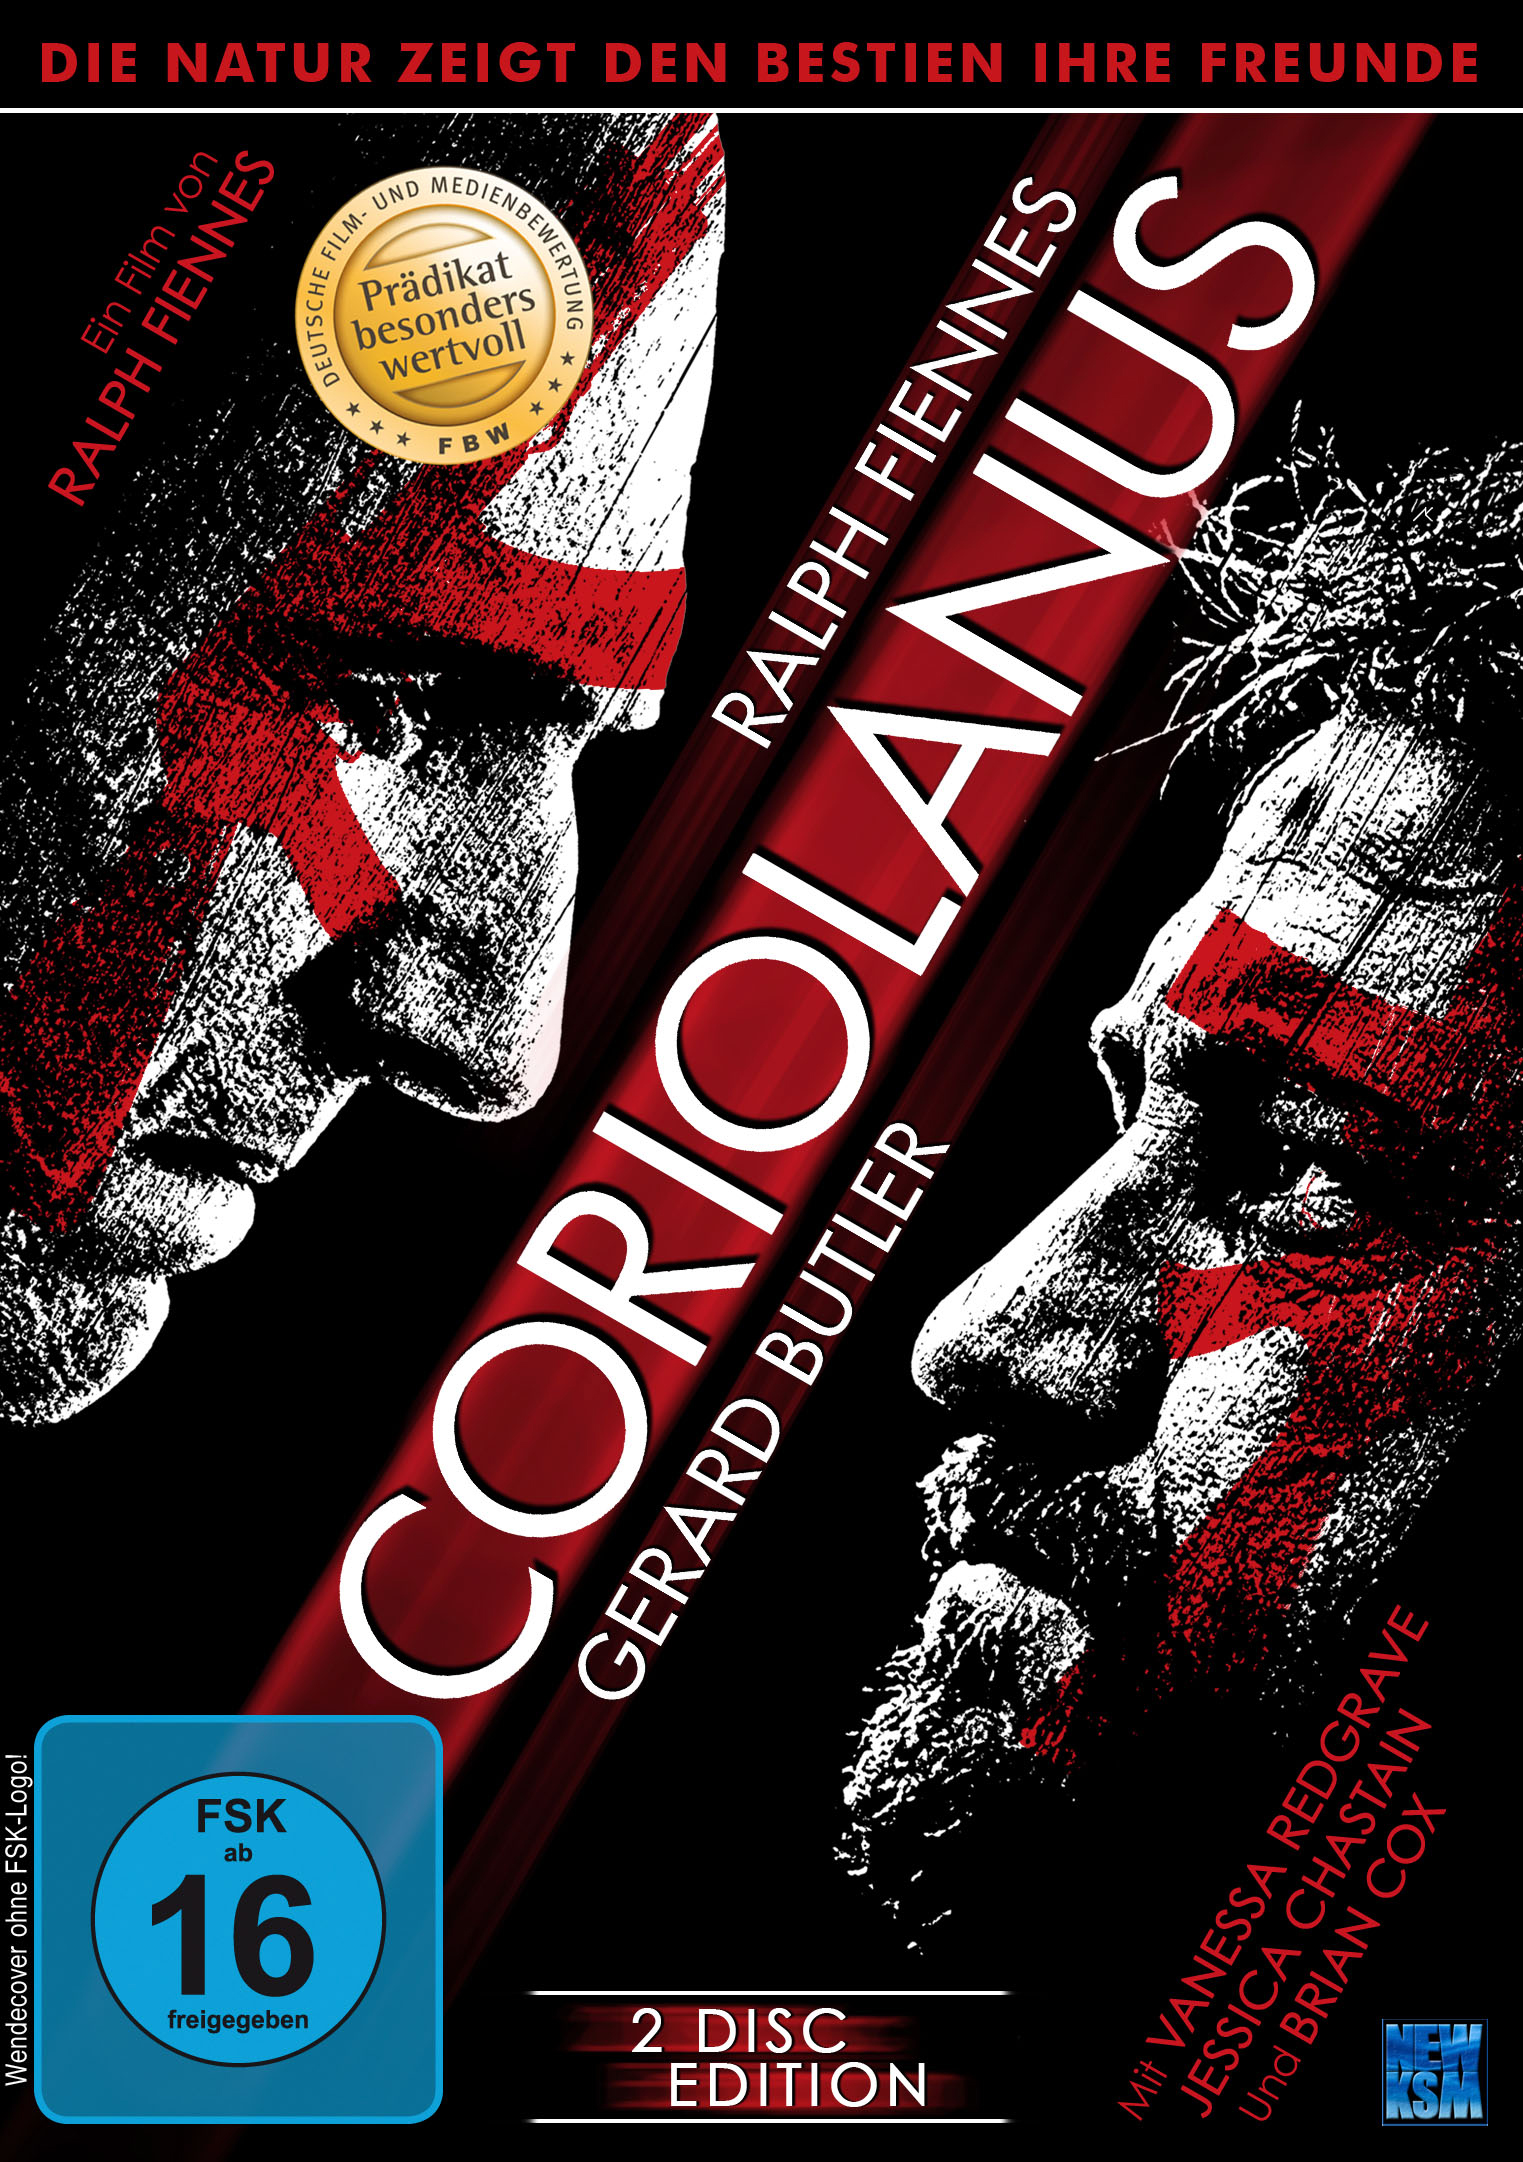 Enemy Coriolanus of War DVD -